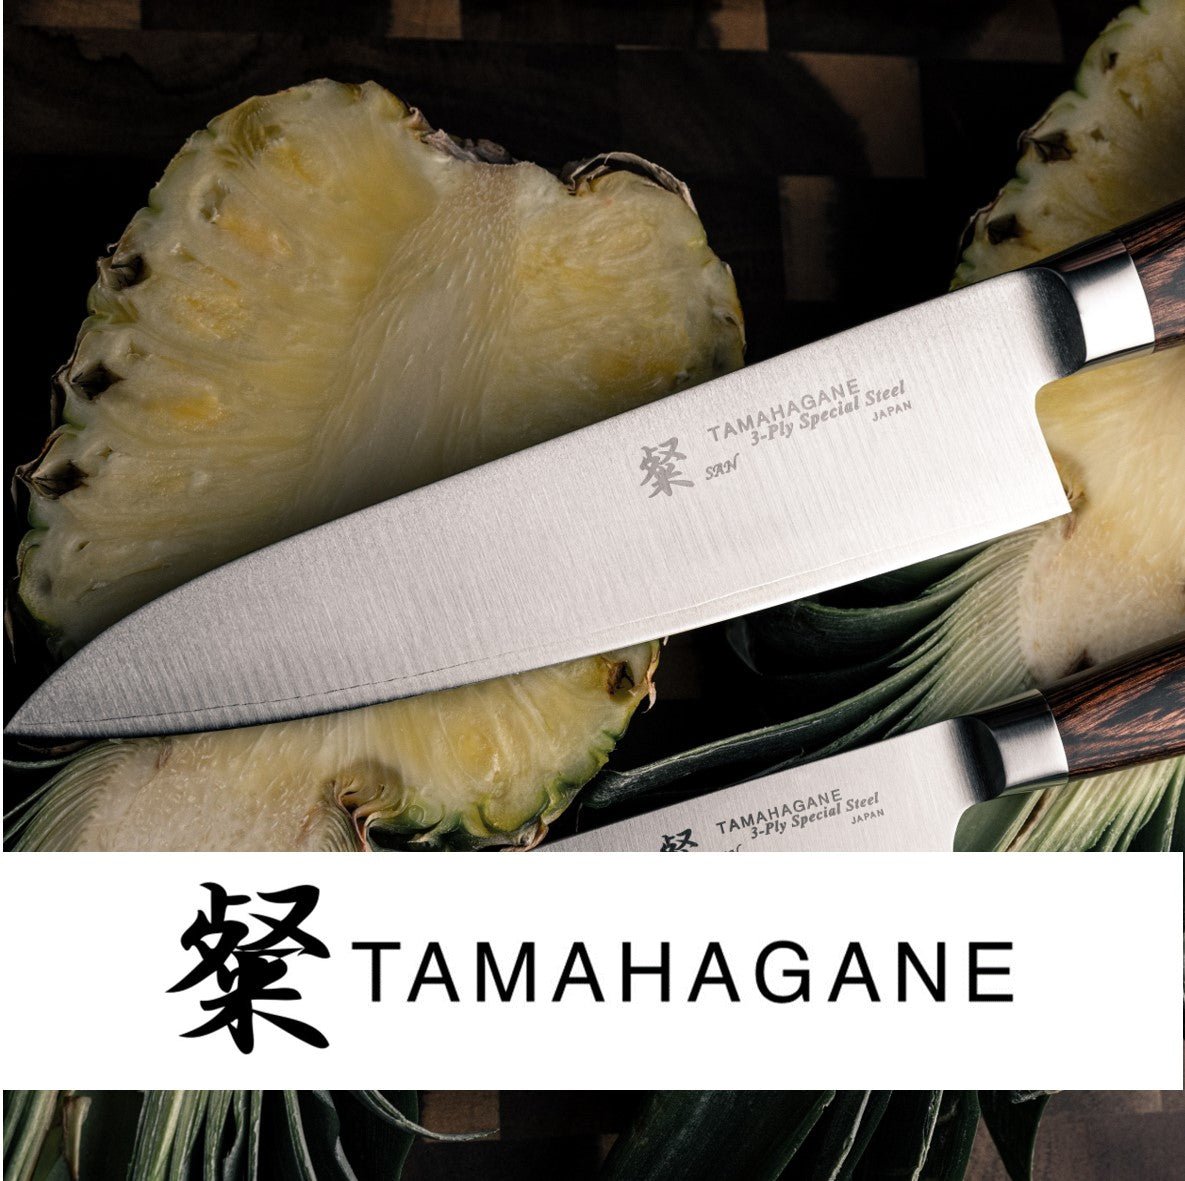 Tamahagane Knives - The Cotswold Knife Company